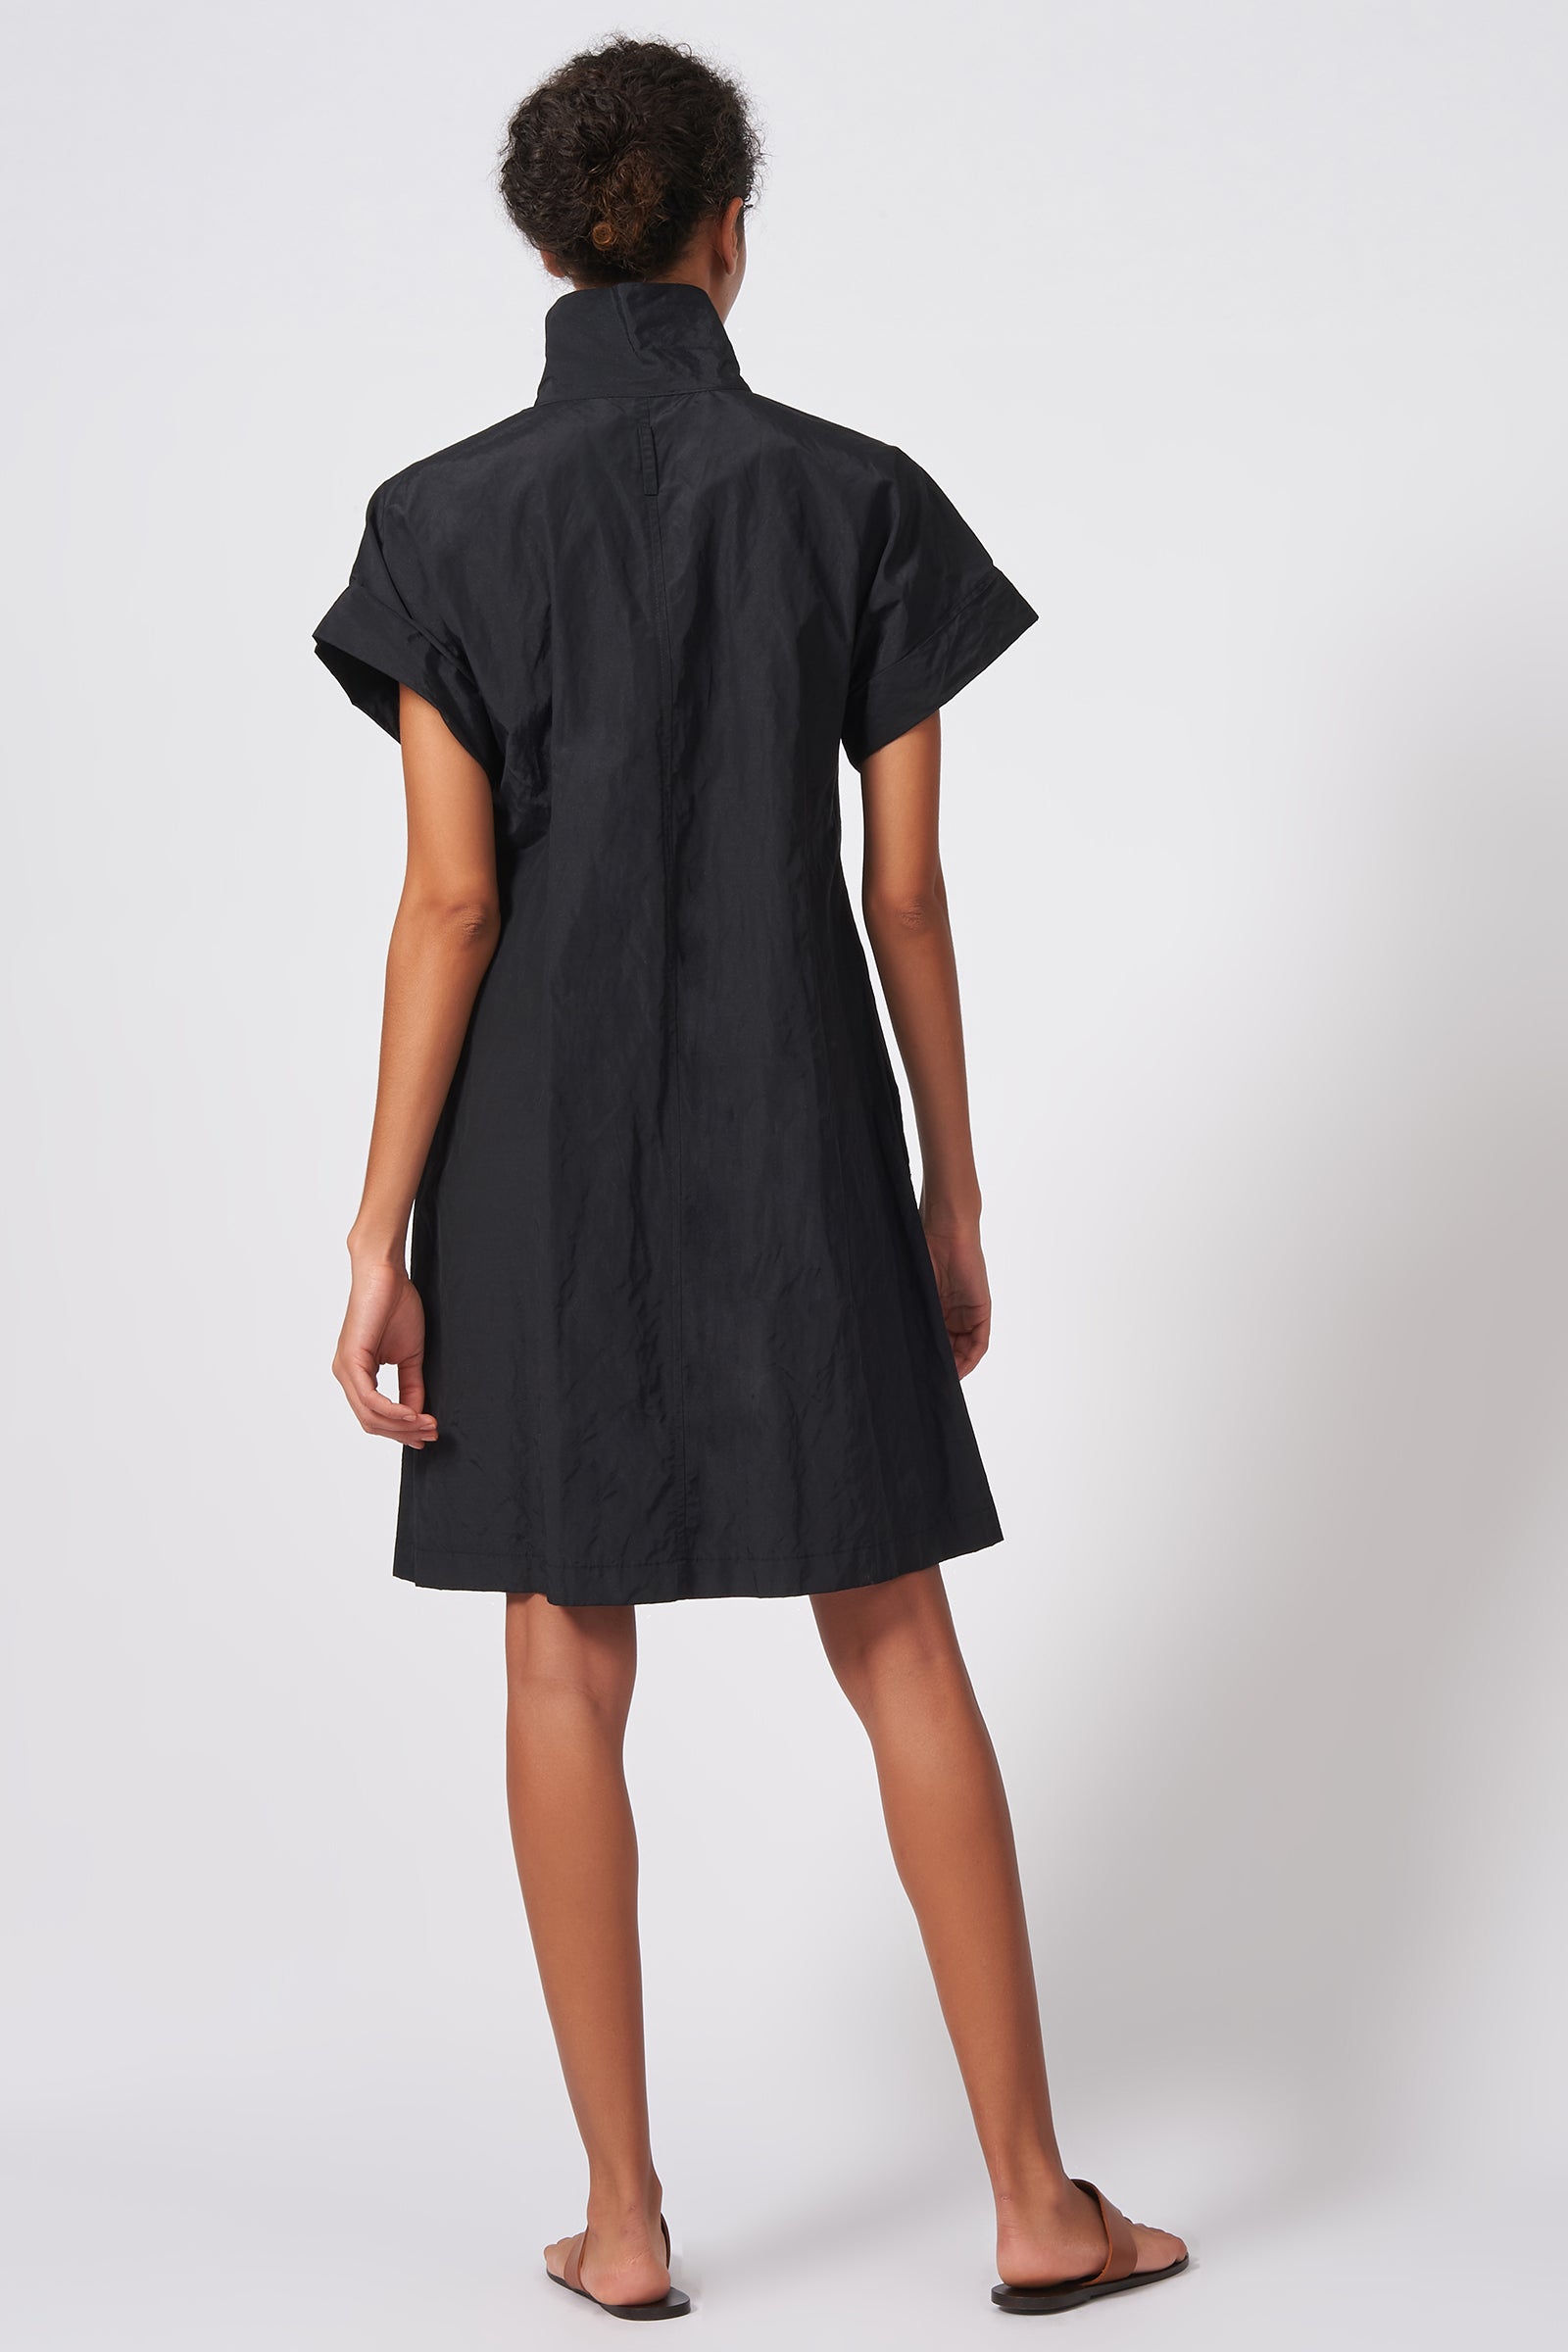 Kal Rieman Kimono Shirt Dress Cotton Nylon in Black on Model Back Full View